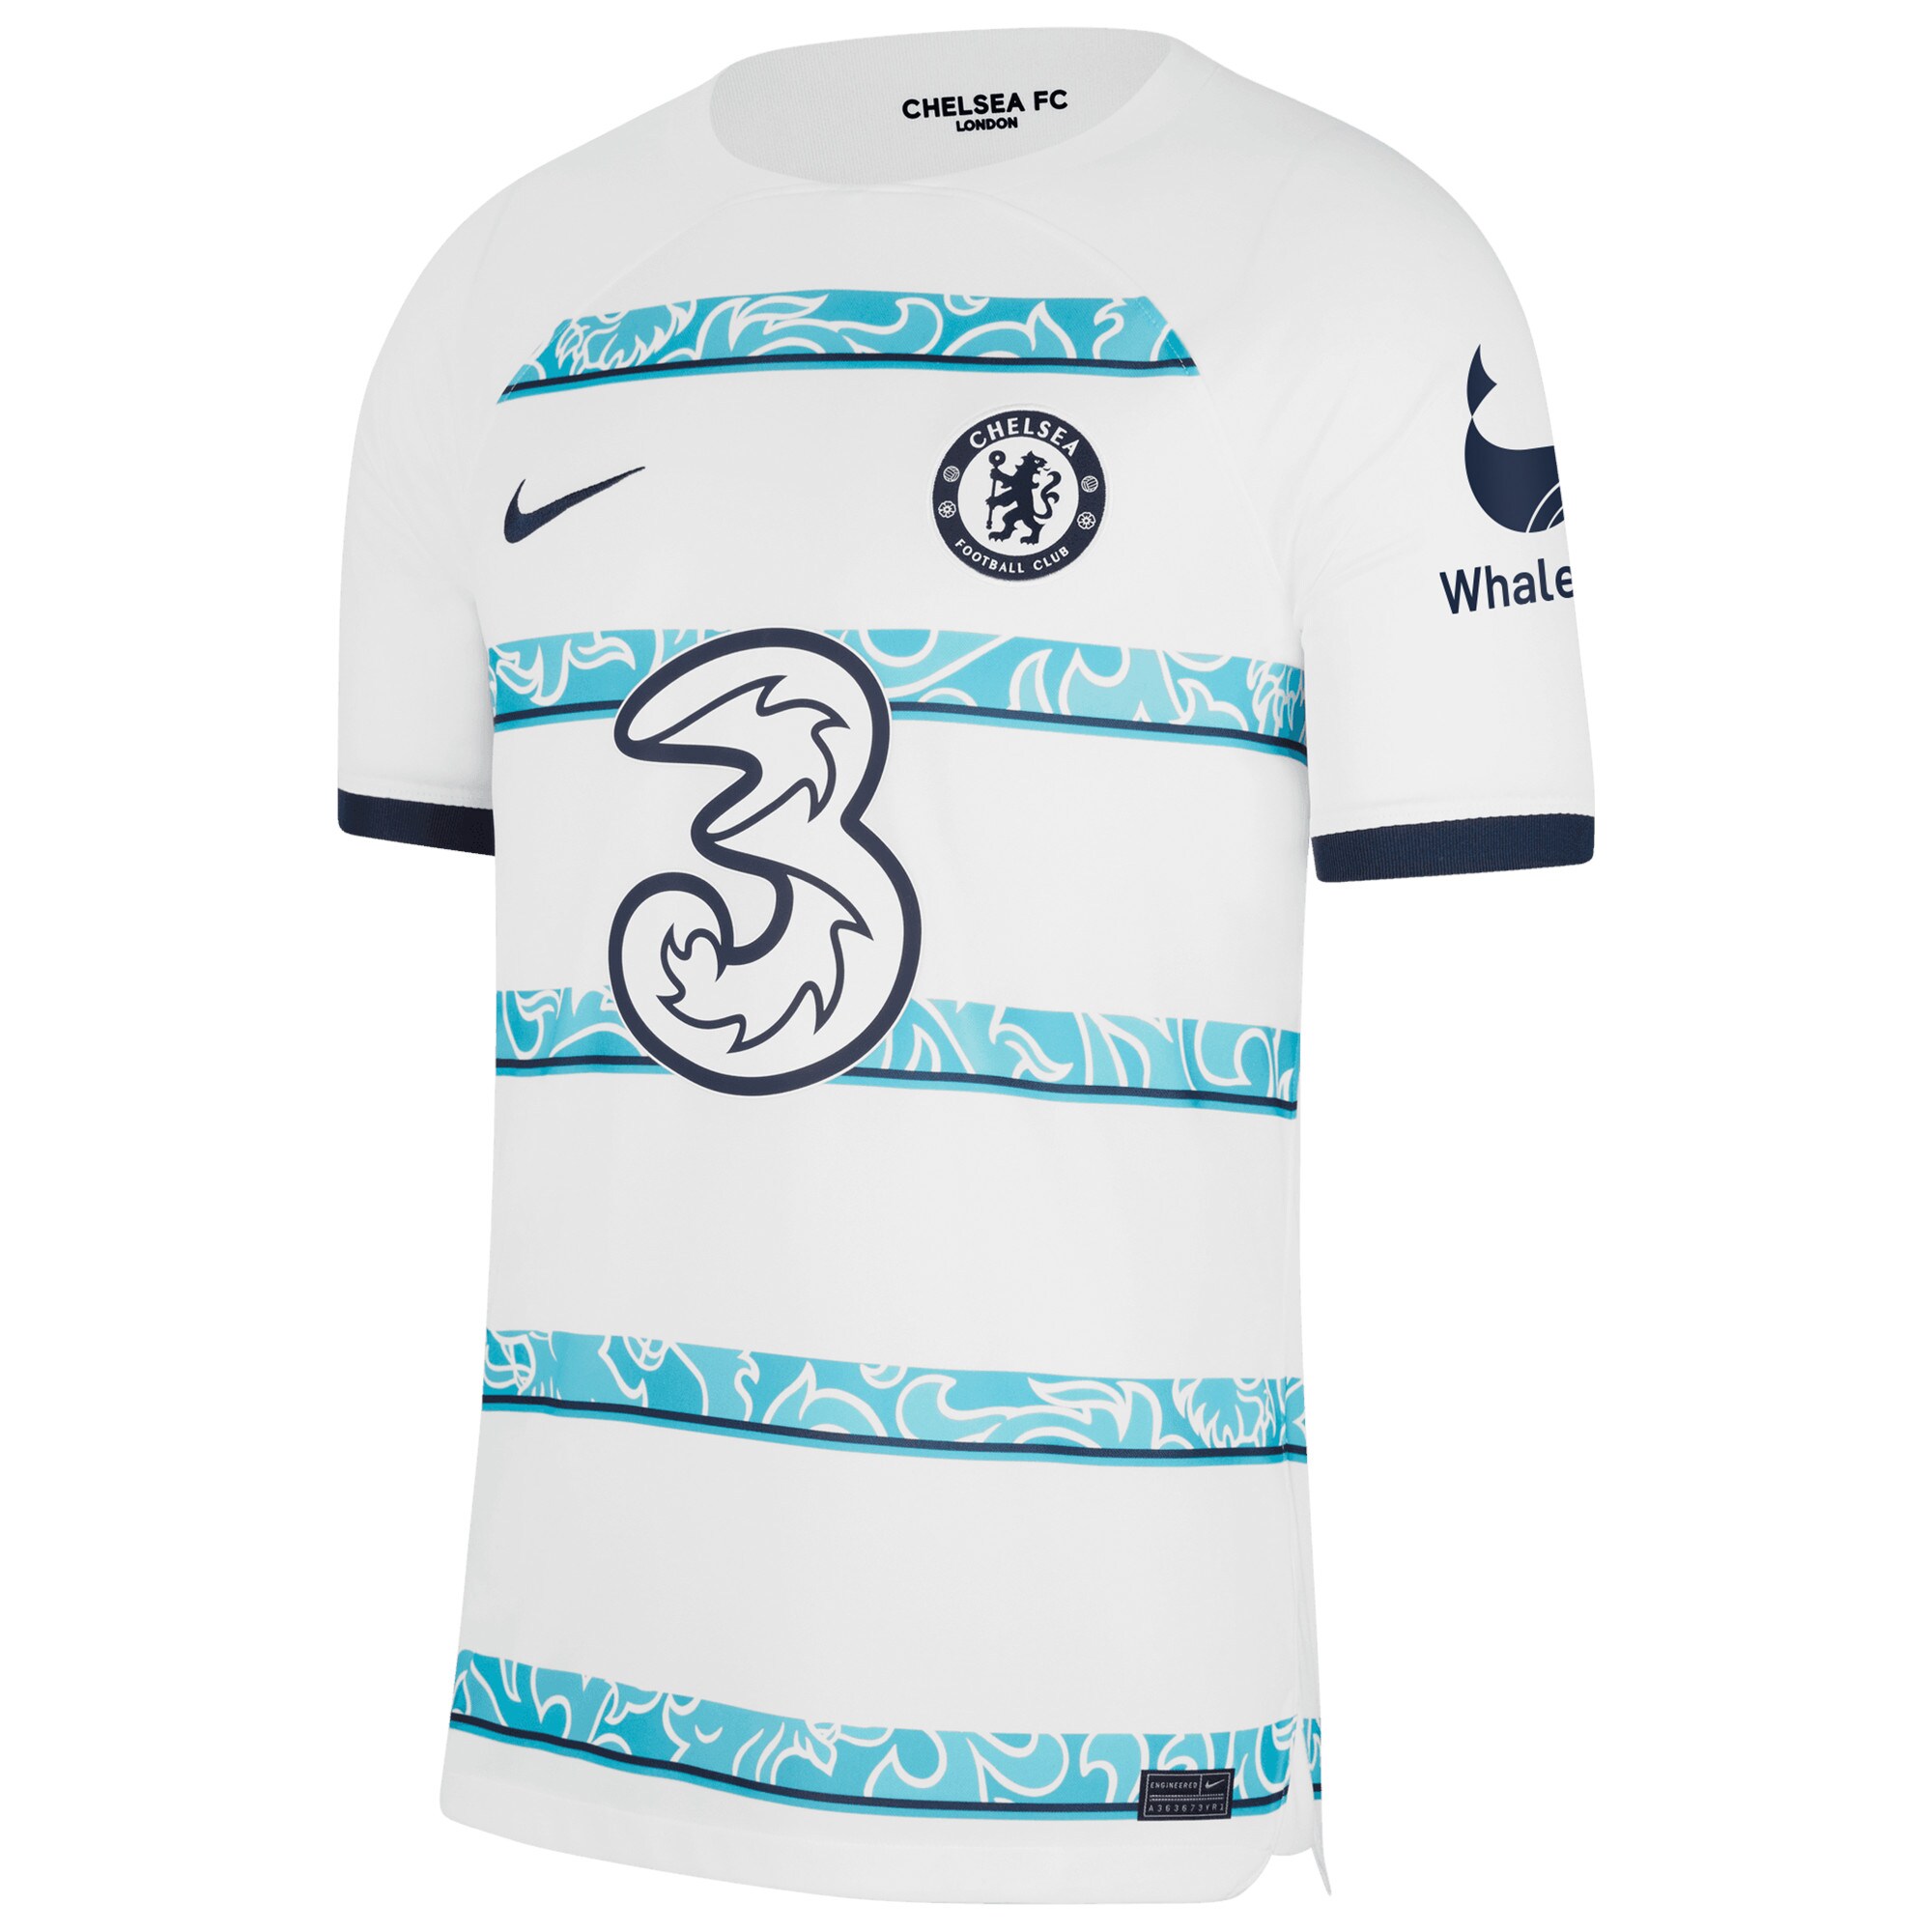 Chelsea WSL Away Stadium Shirt 2022-23 with England 9 printing